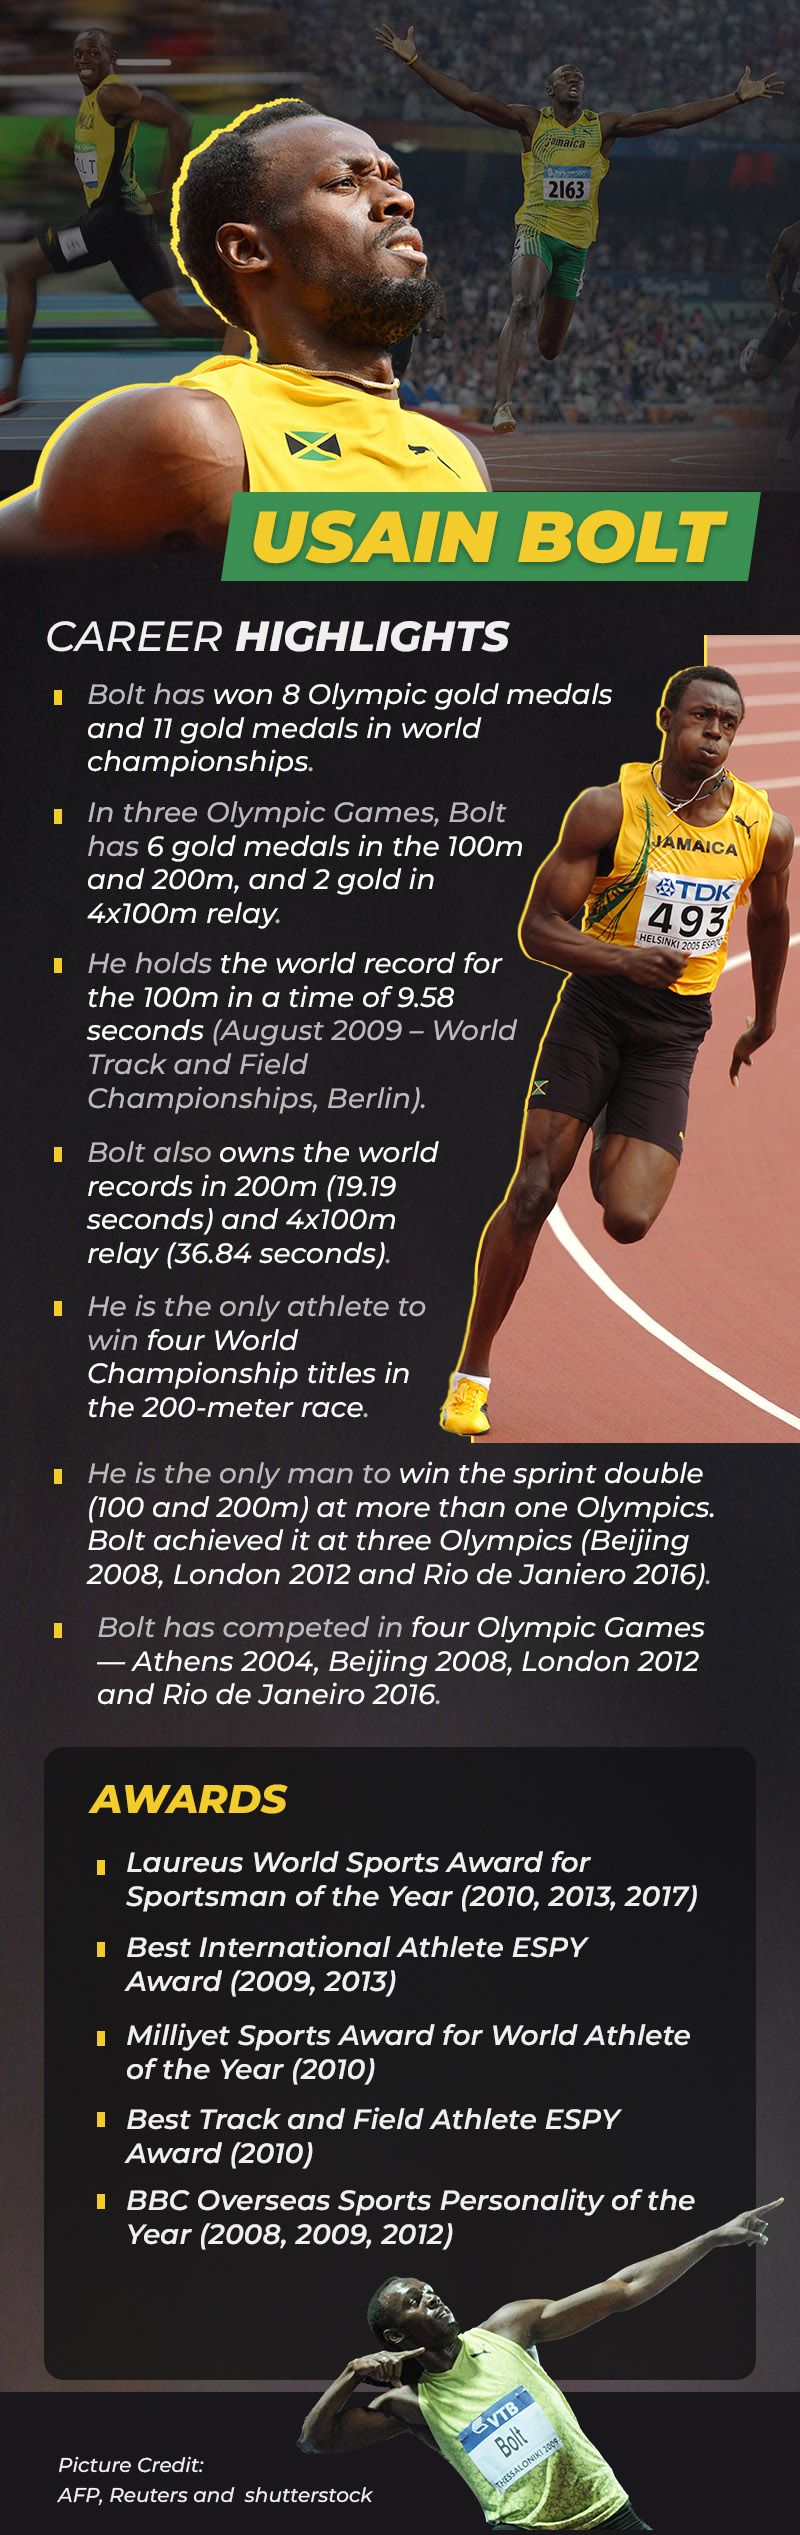 Usain Bolt FactBox